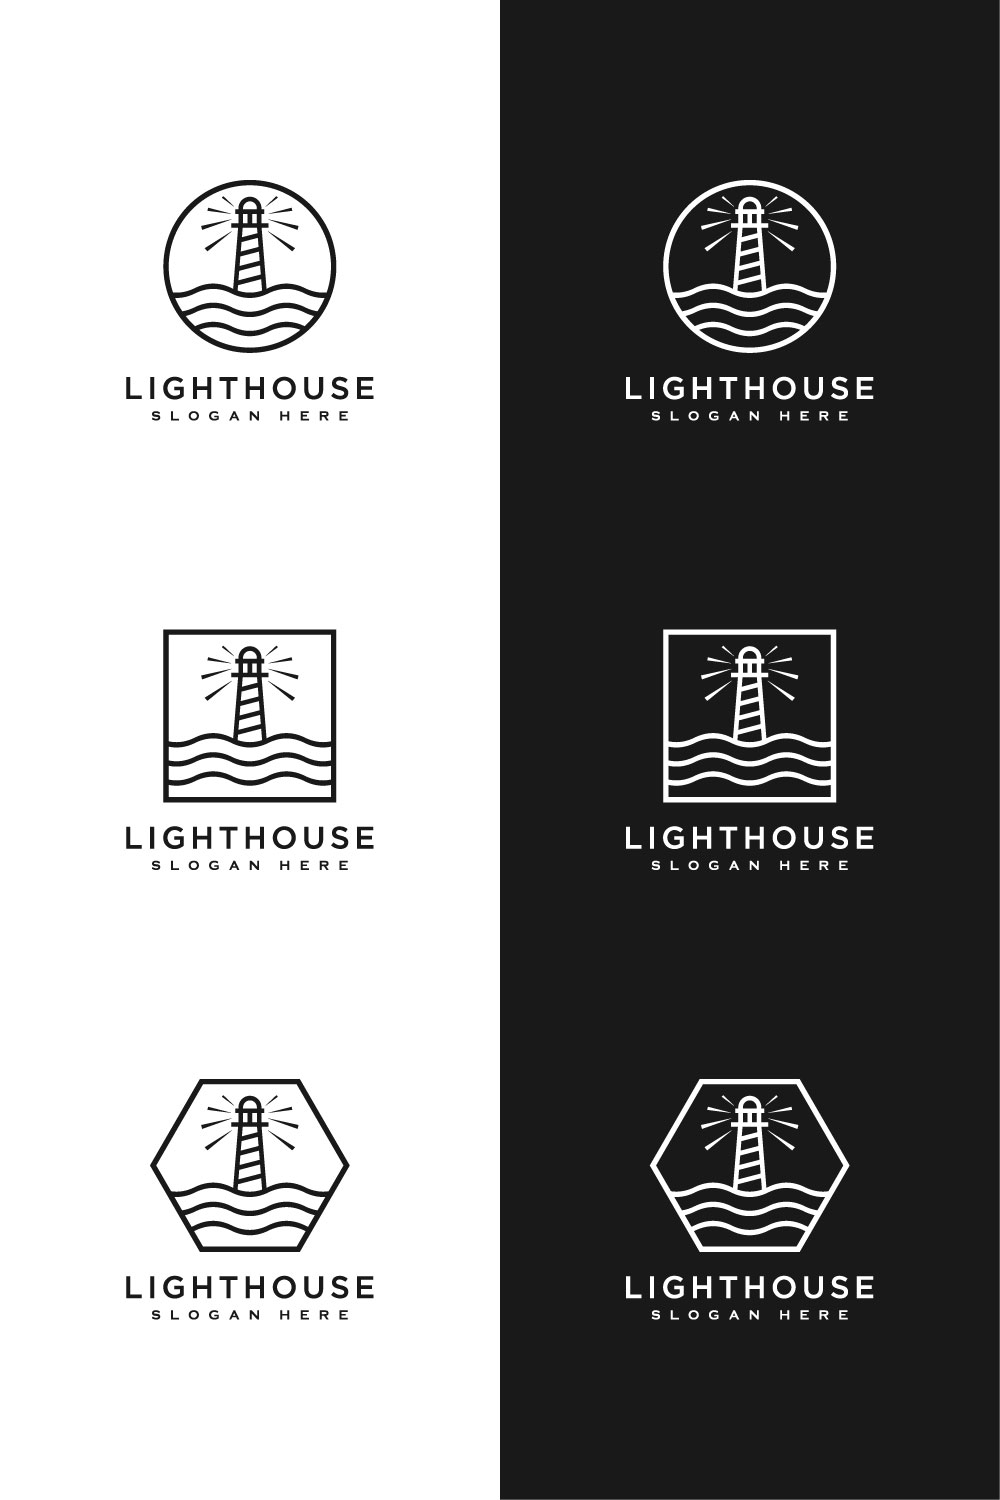 3 Lighthouse Logo Vector Designs pinterest.